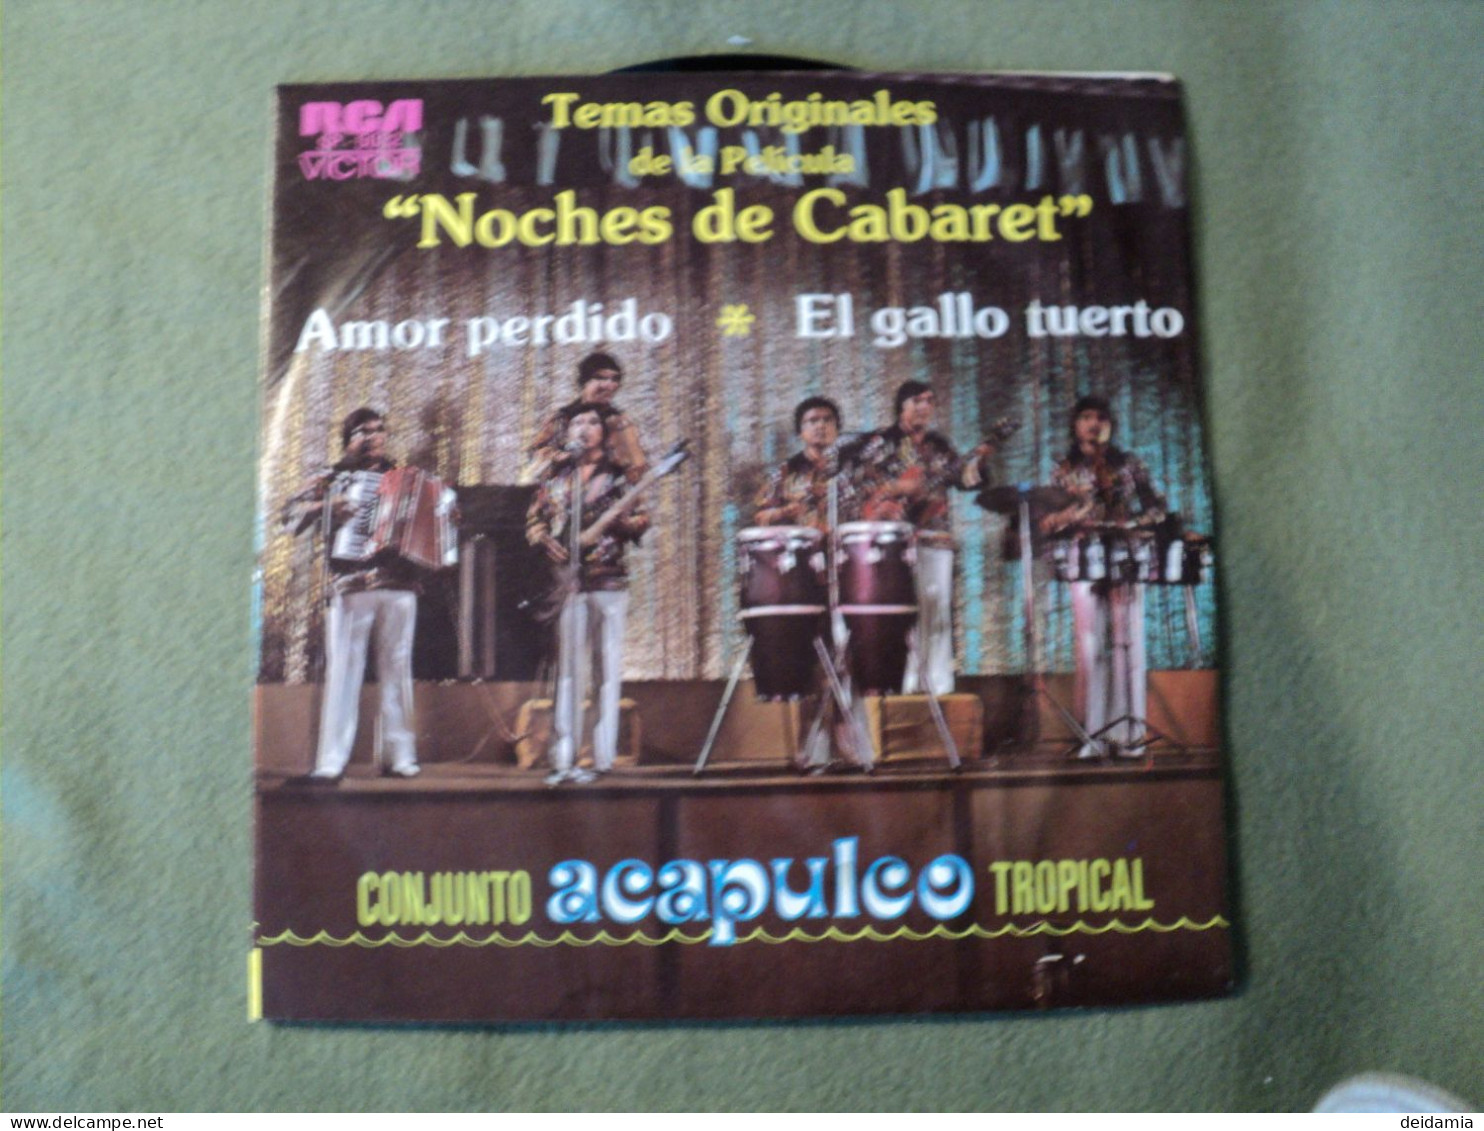 45 TOURS CONJUNTO ACAPULCO TROPICAL. 1978. RCA VICTOR 5032 DU FILM NOCHES DE CABARET. AMOR PERDIDO / EL GALLO TUERTO - Musiques Du Monde